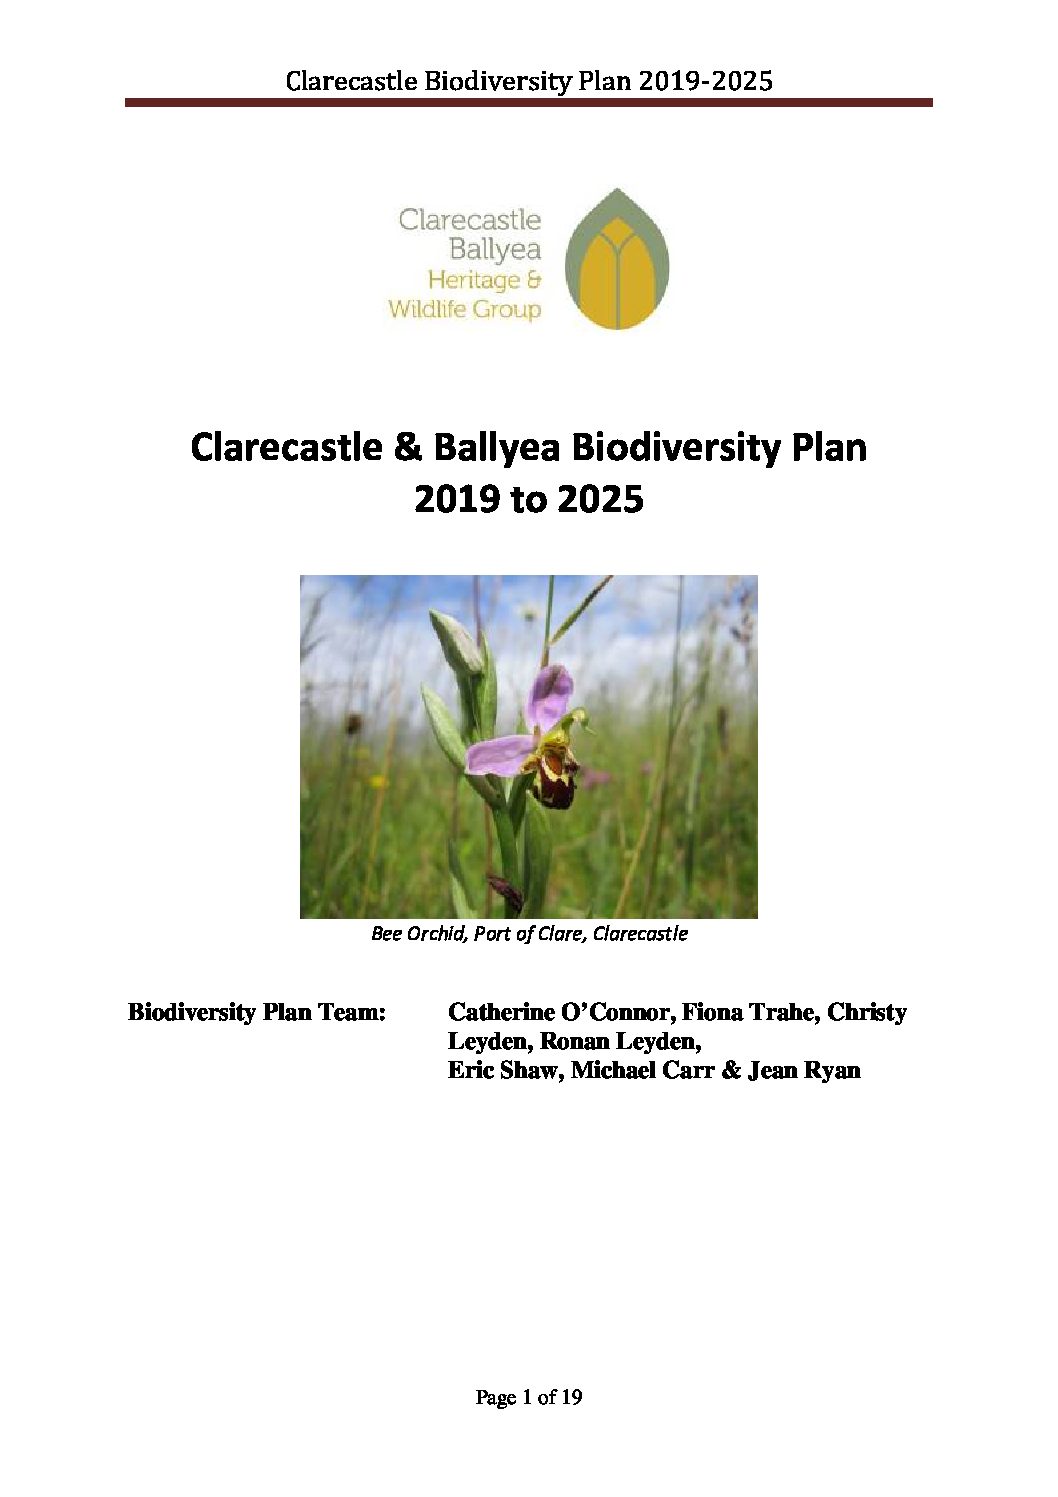 Biodiversity Plan